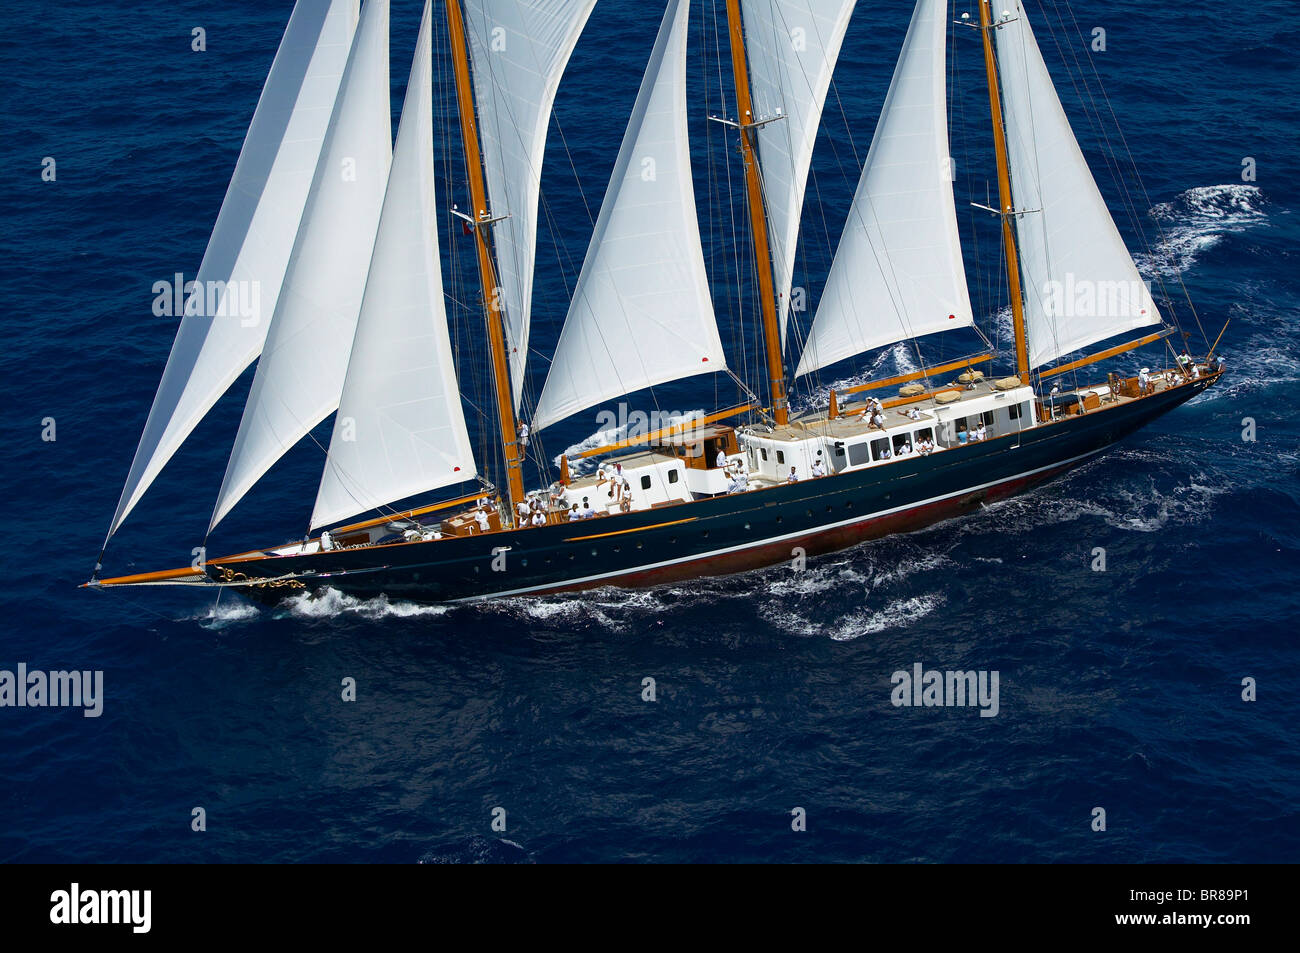 The three-masted schooner "Fleurtje" sailing at Antigua ...